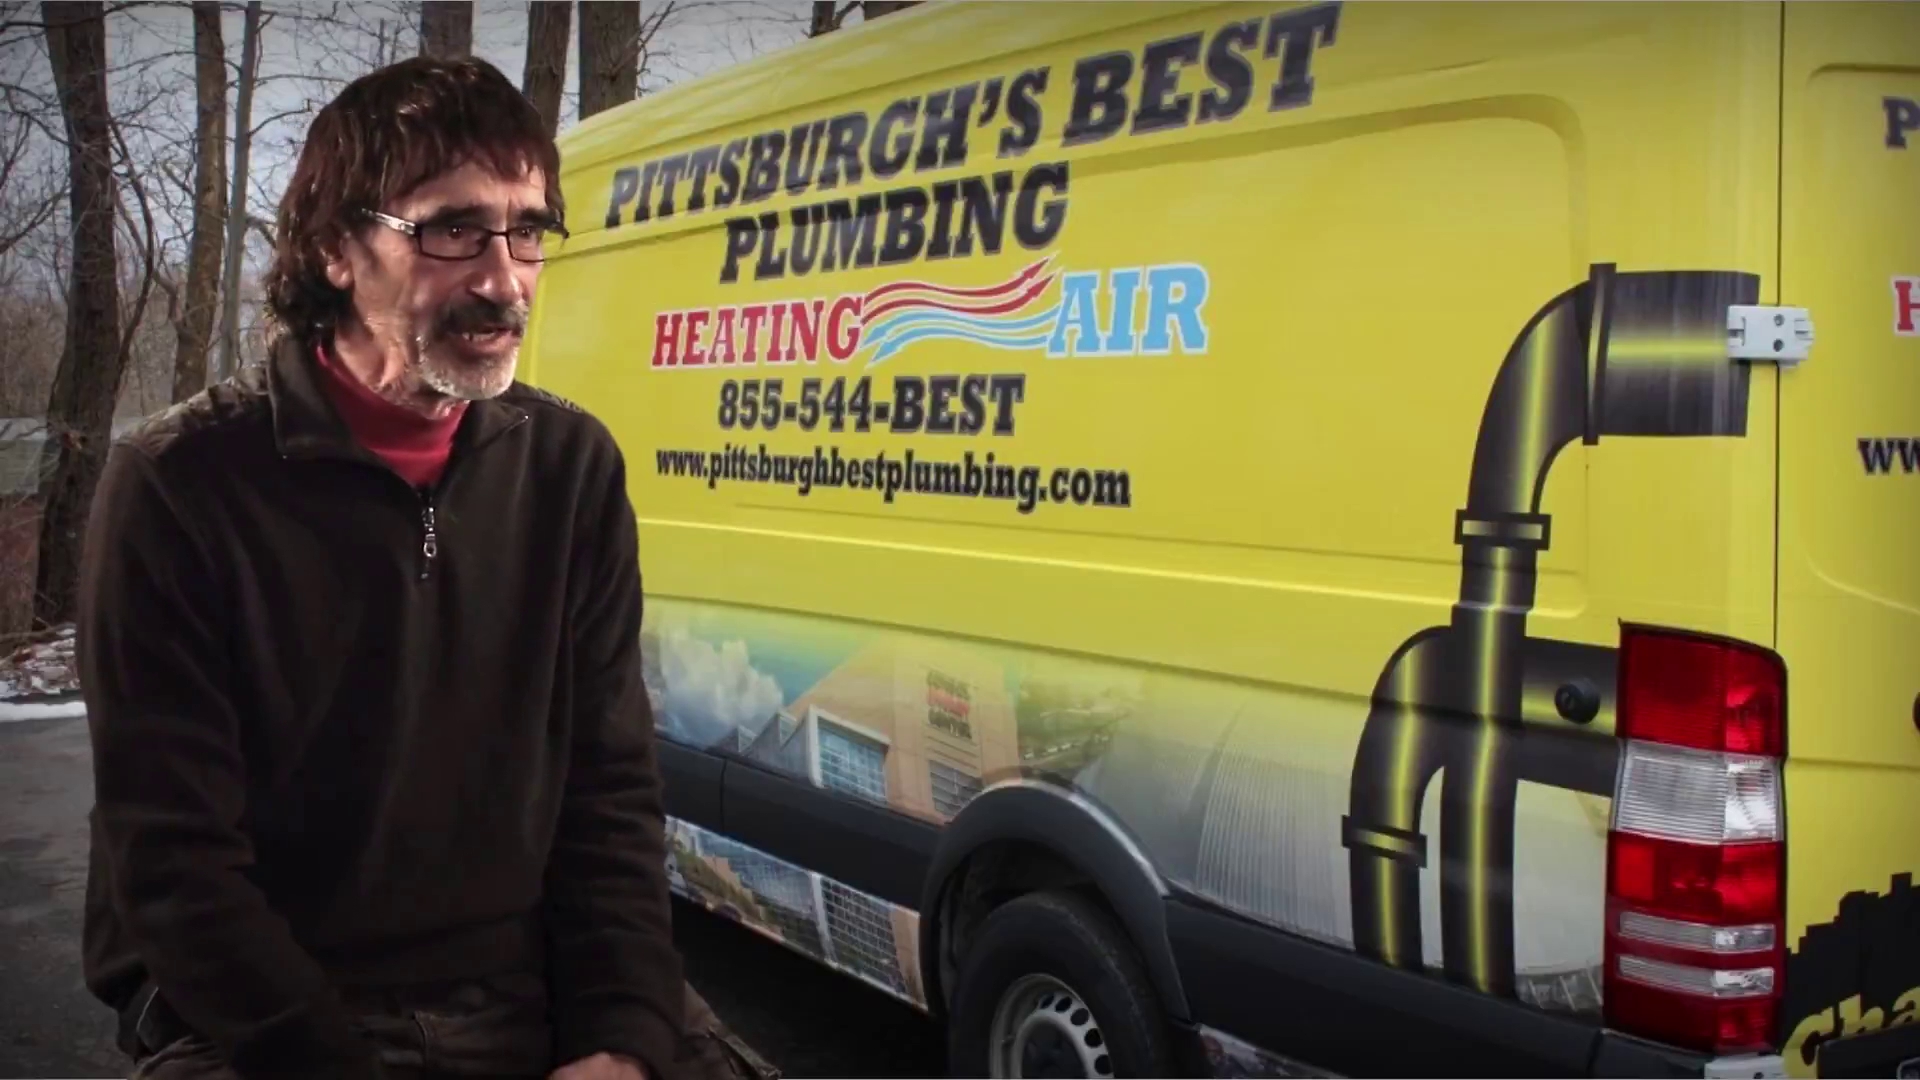 Pittsburgh's Best Plumbing HVAC